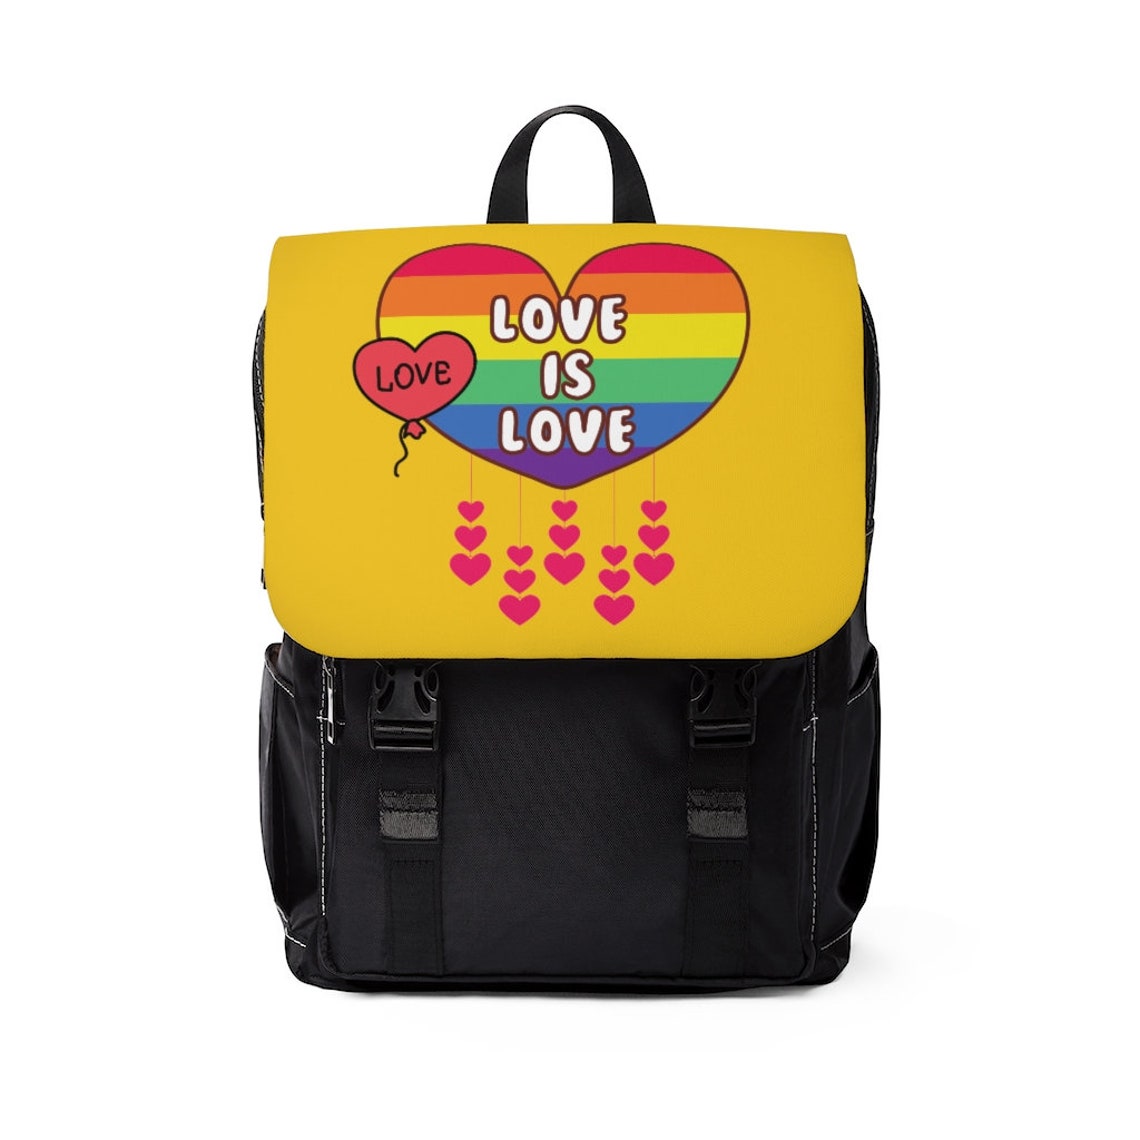 Rainbow Backpack Pride Backpack Bag With Lgbt Flag Black Etsy